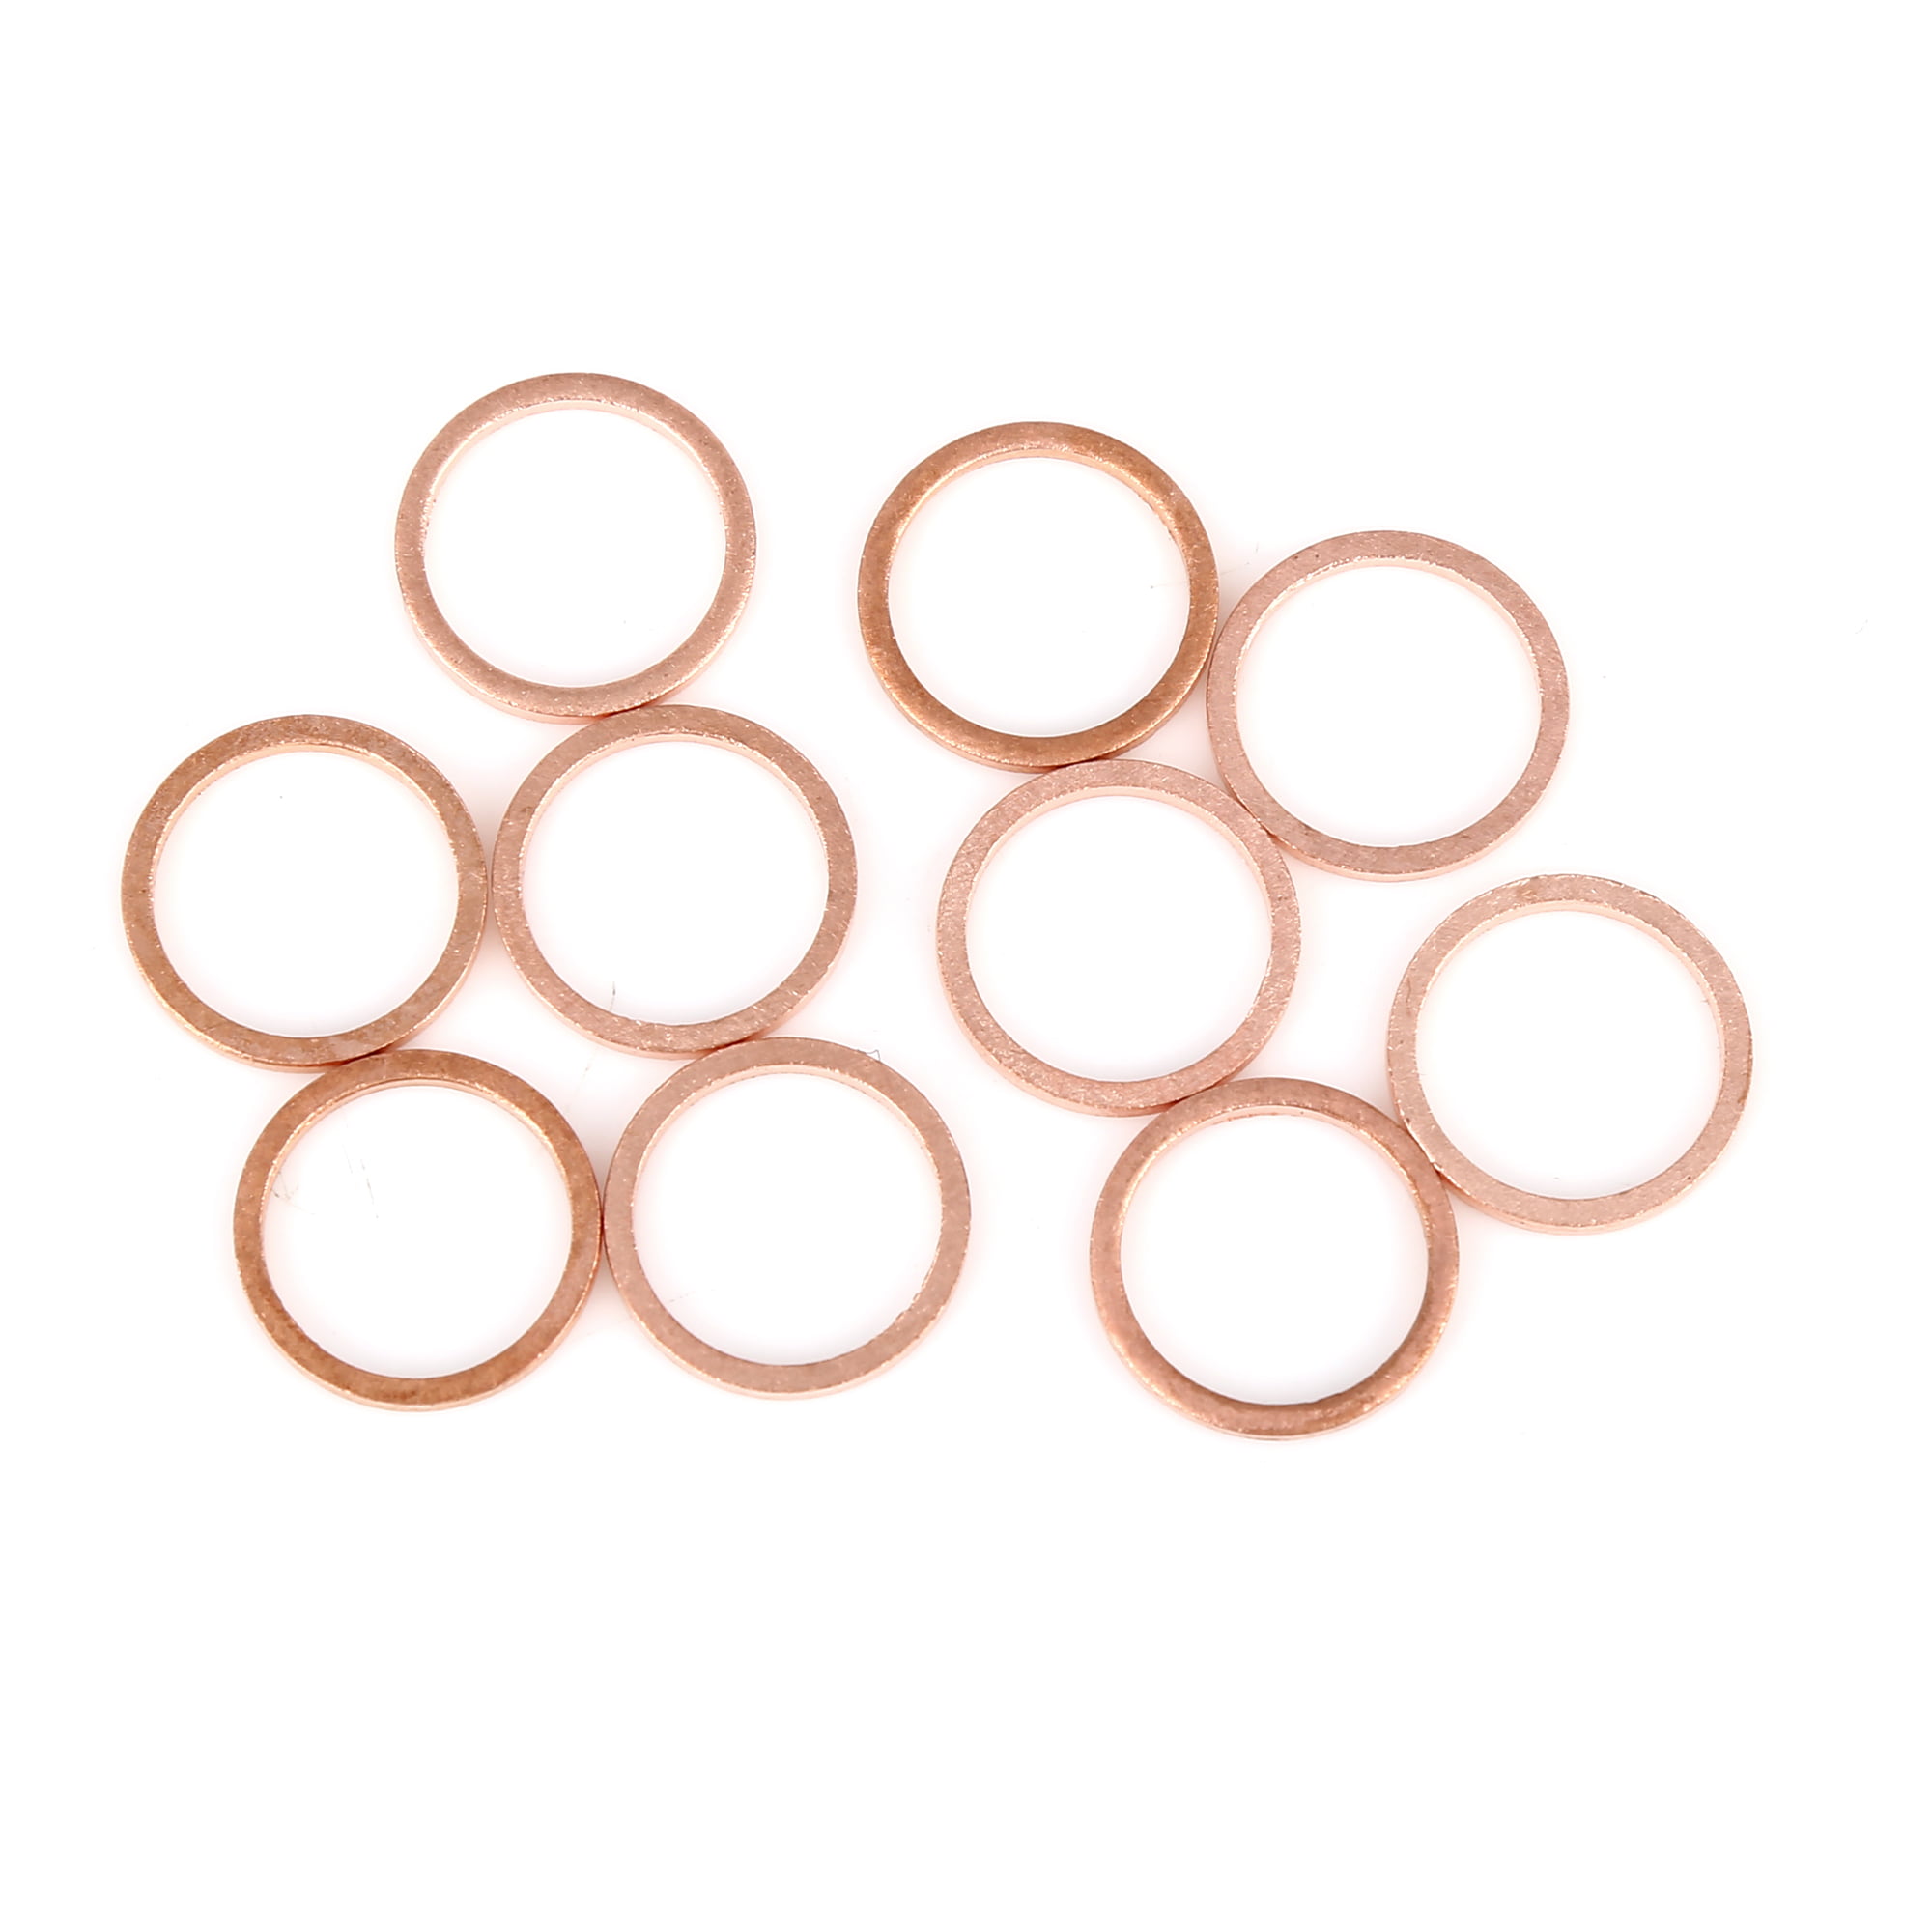 10/12/15/18/24 Sizes Copper Flat Gaskets Crush Washer Sealing Ring Spacer Set 